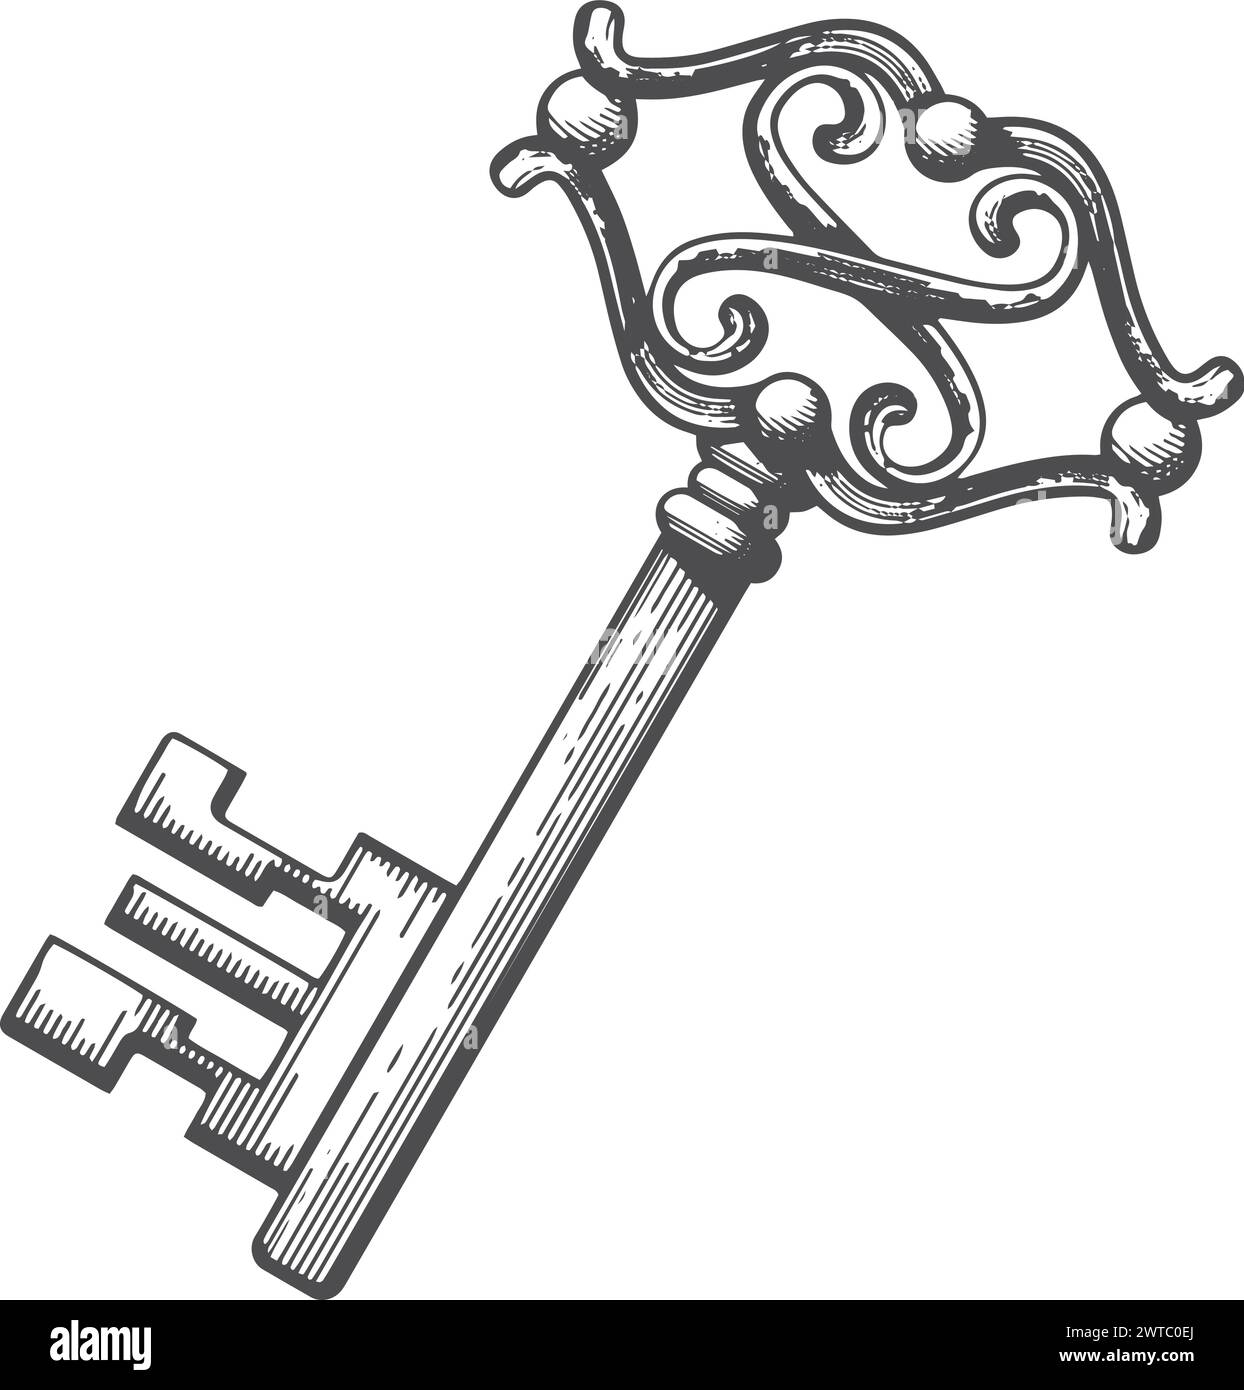 Baroque metal key drawing. Vintage style engraving Stock Vector